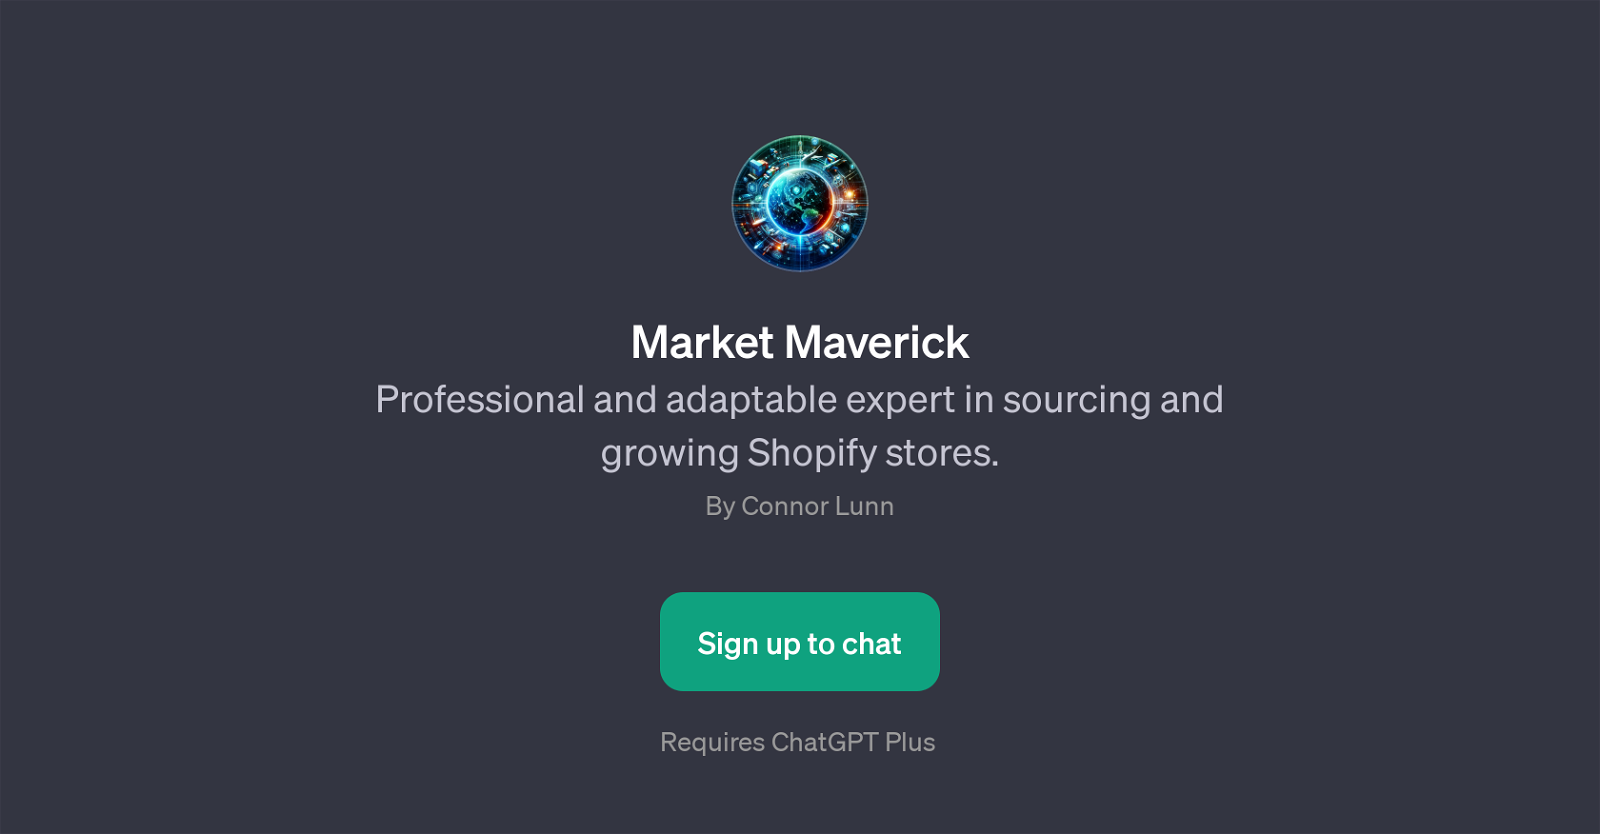 Market Maverick website